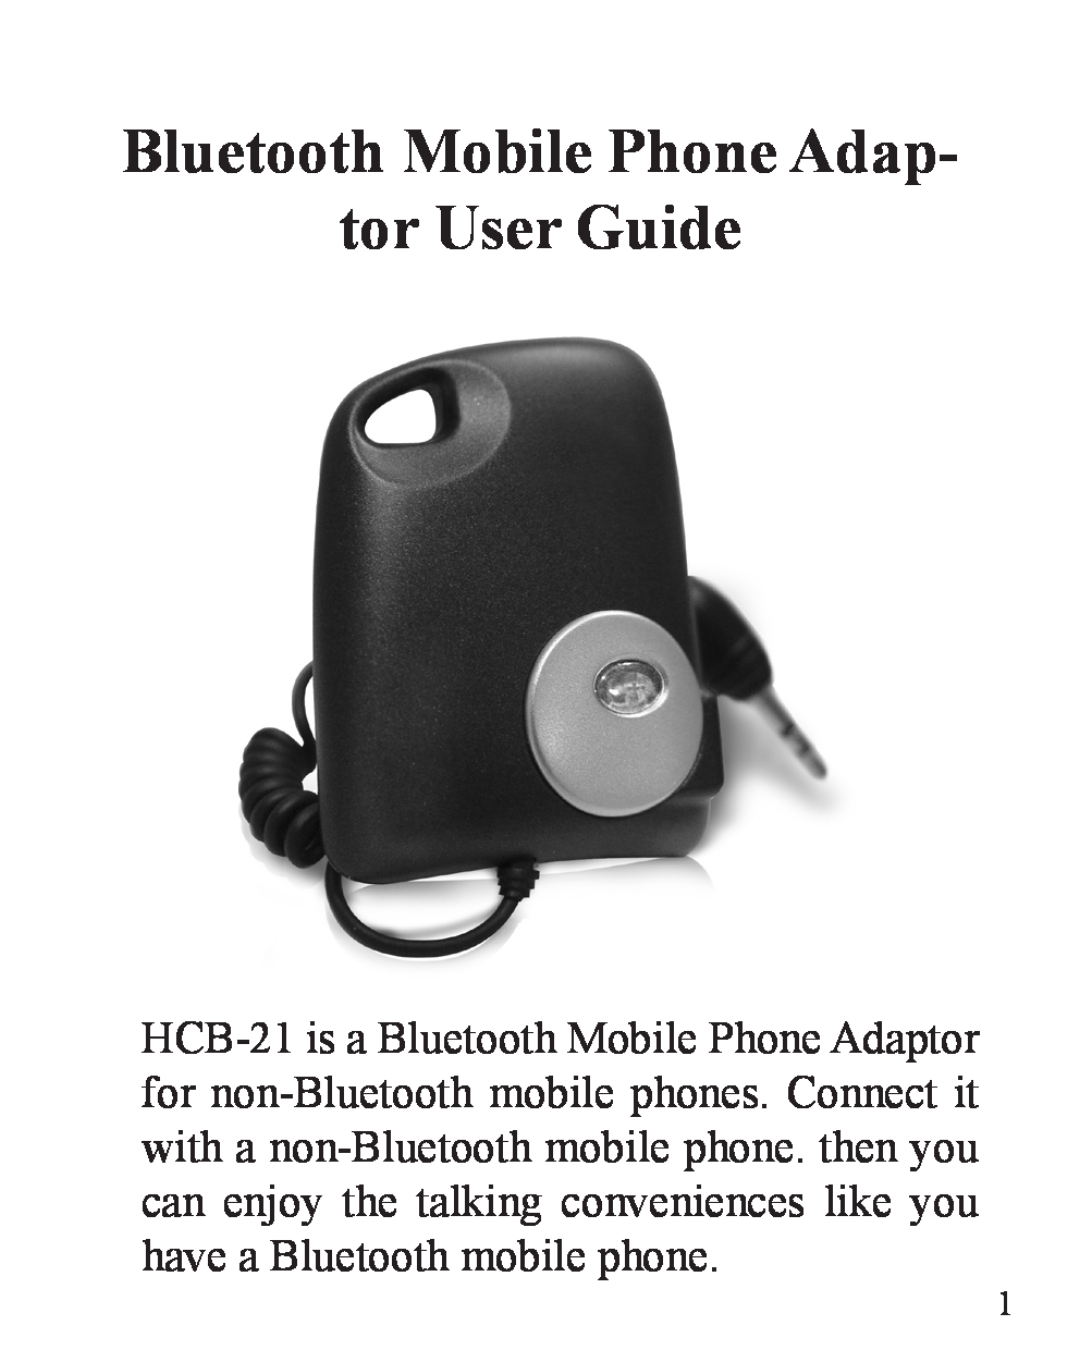 Huey Chiao HCB-21 manual Bluetooth Mobile Phone Adap tor User Guide 